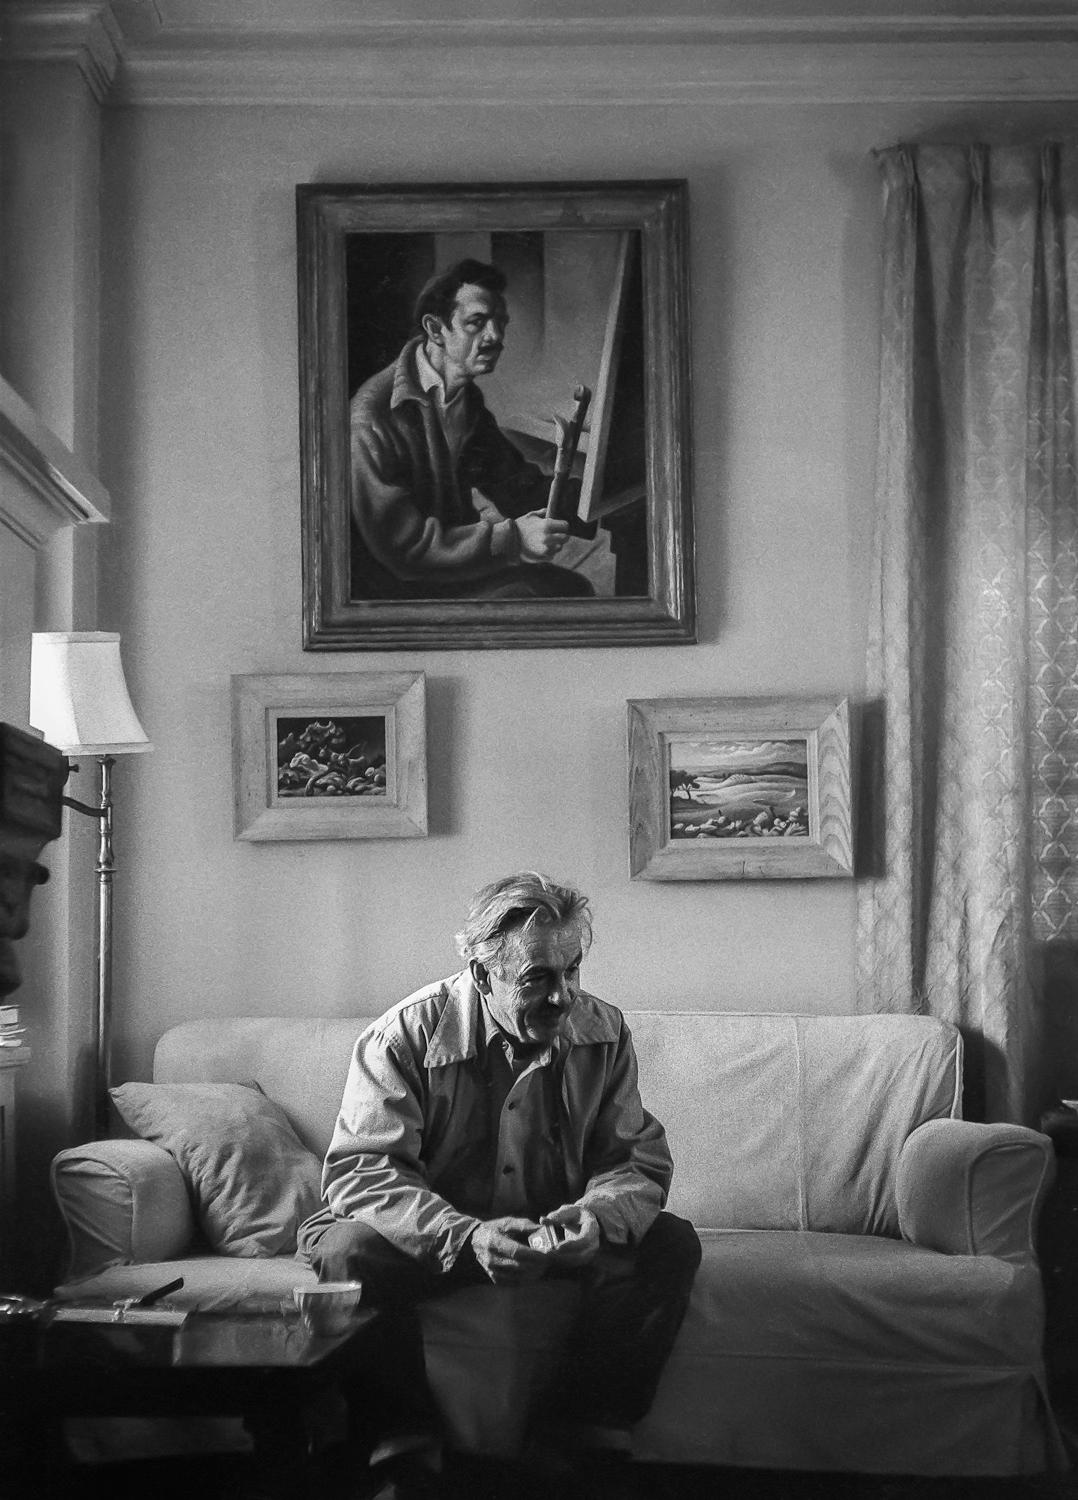 Benton on the Couch (Thomas Hart Benton Plate #28) - Photograph by Michael Mardikes